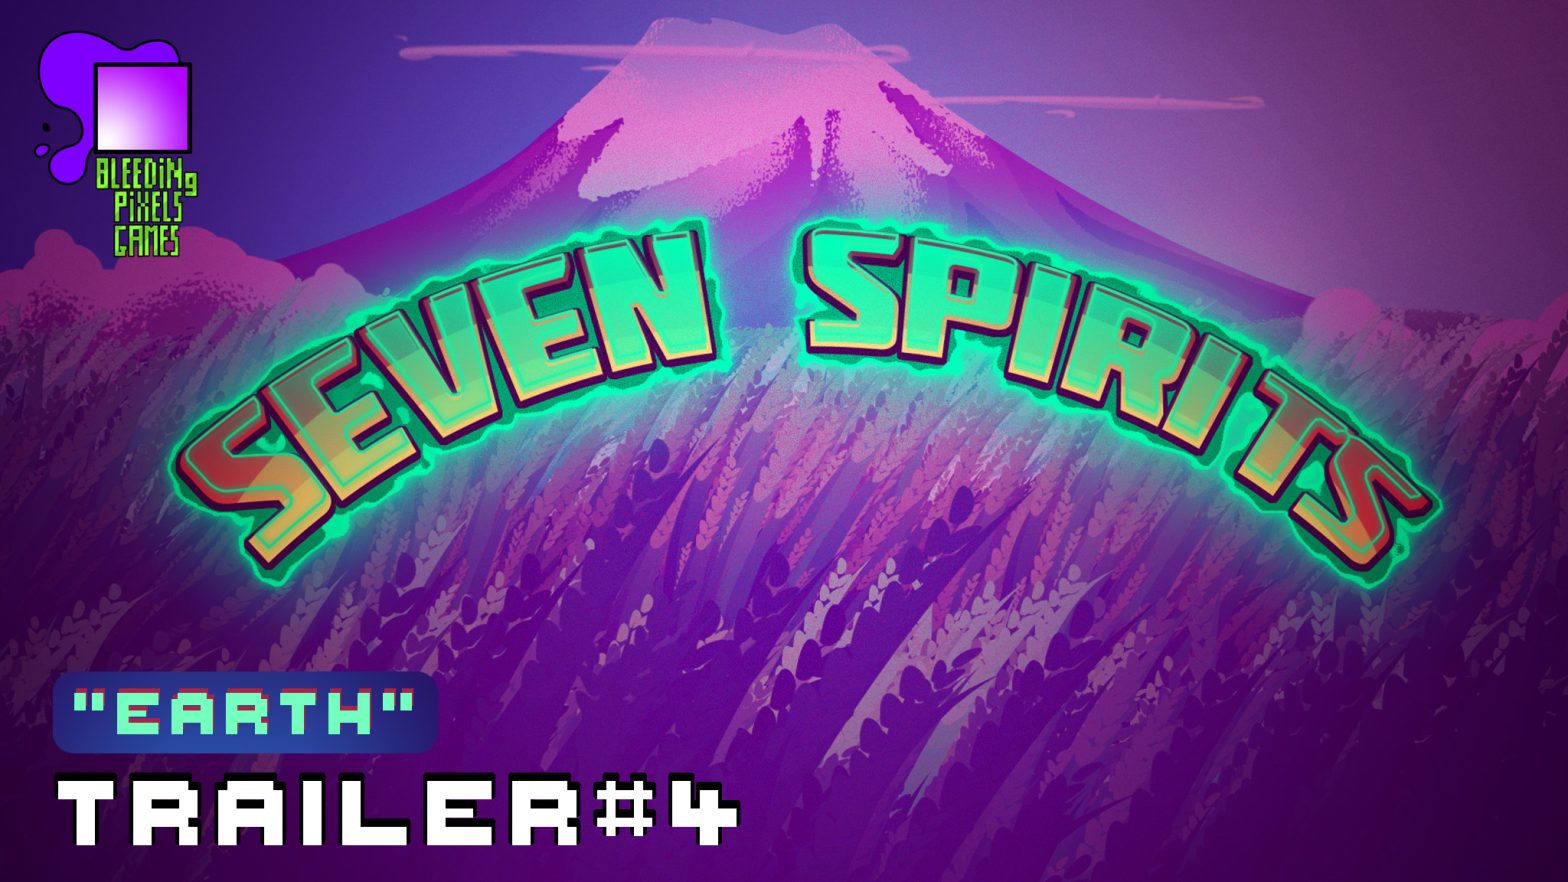 Seven Spirits – Trailer #4 “Earth”